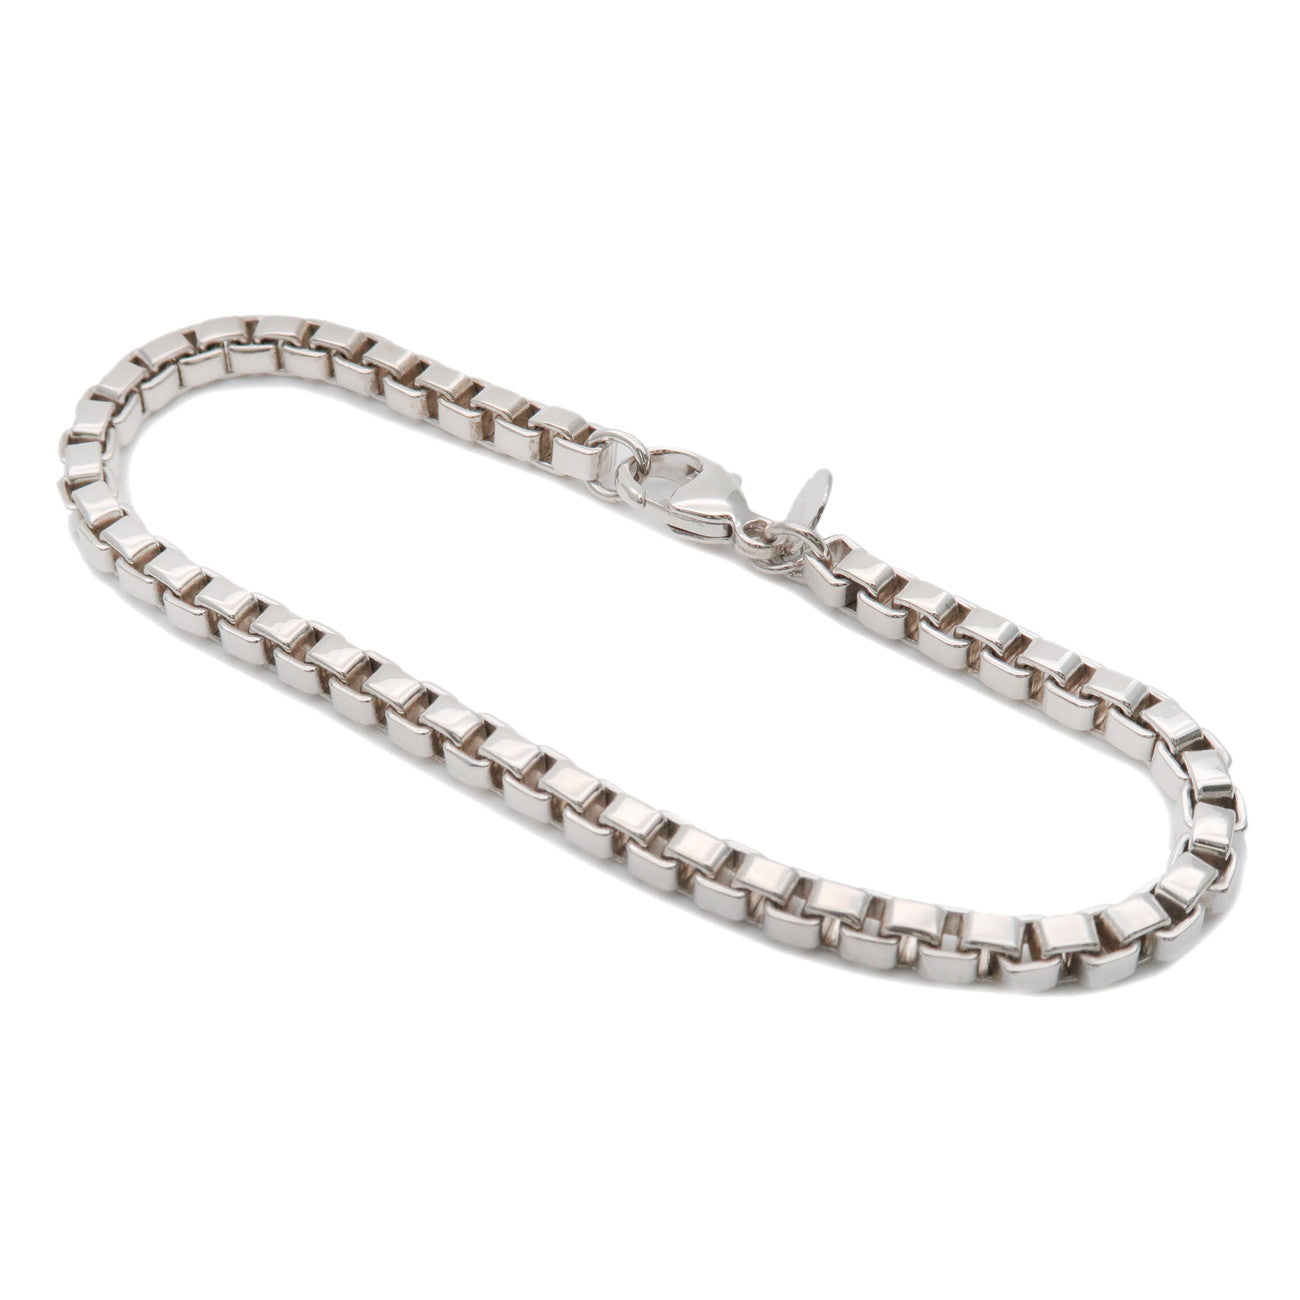 Tiffany&Co.-Venetian-Link-Bracelet-SV925-Silver-925